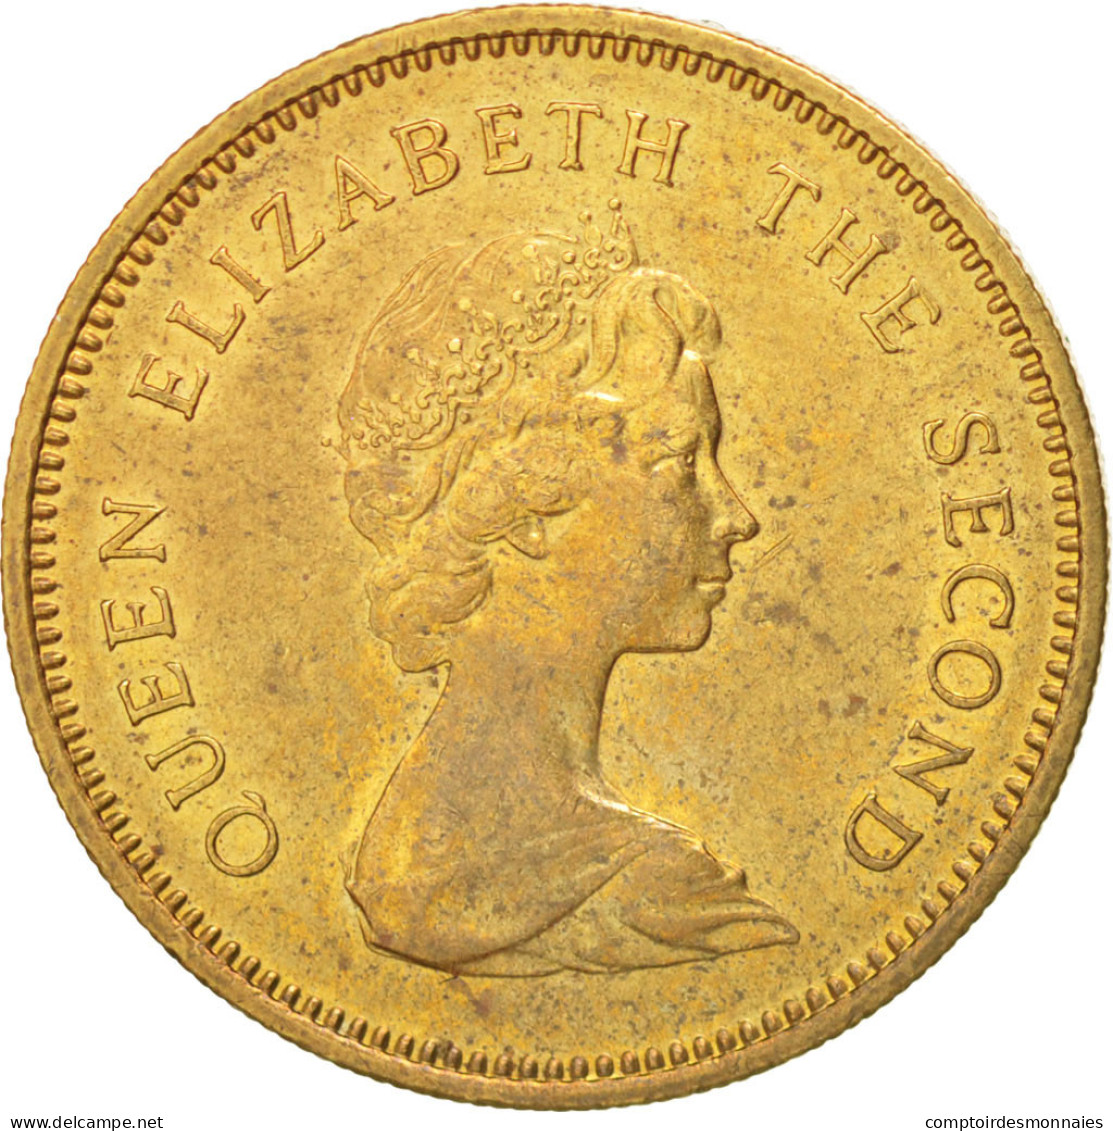 Monnaie, Hong Kong, Elizabeth II, 50 Cents, 1980, SUP, Nickel-brass, KM:41 - Hong Kong